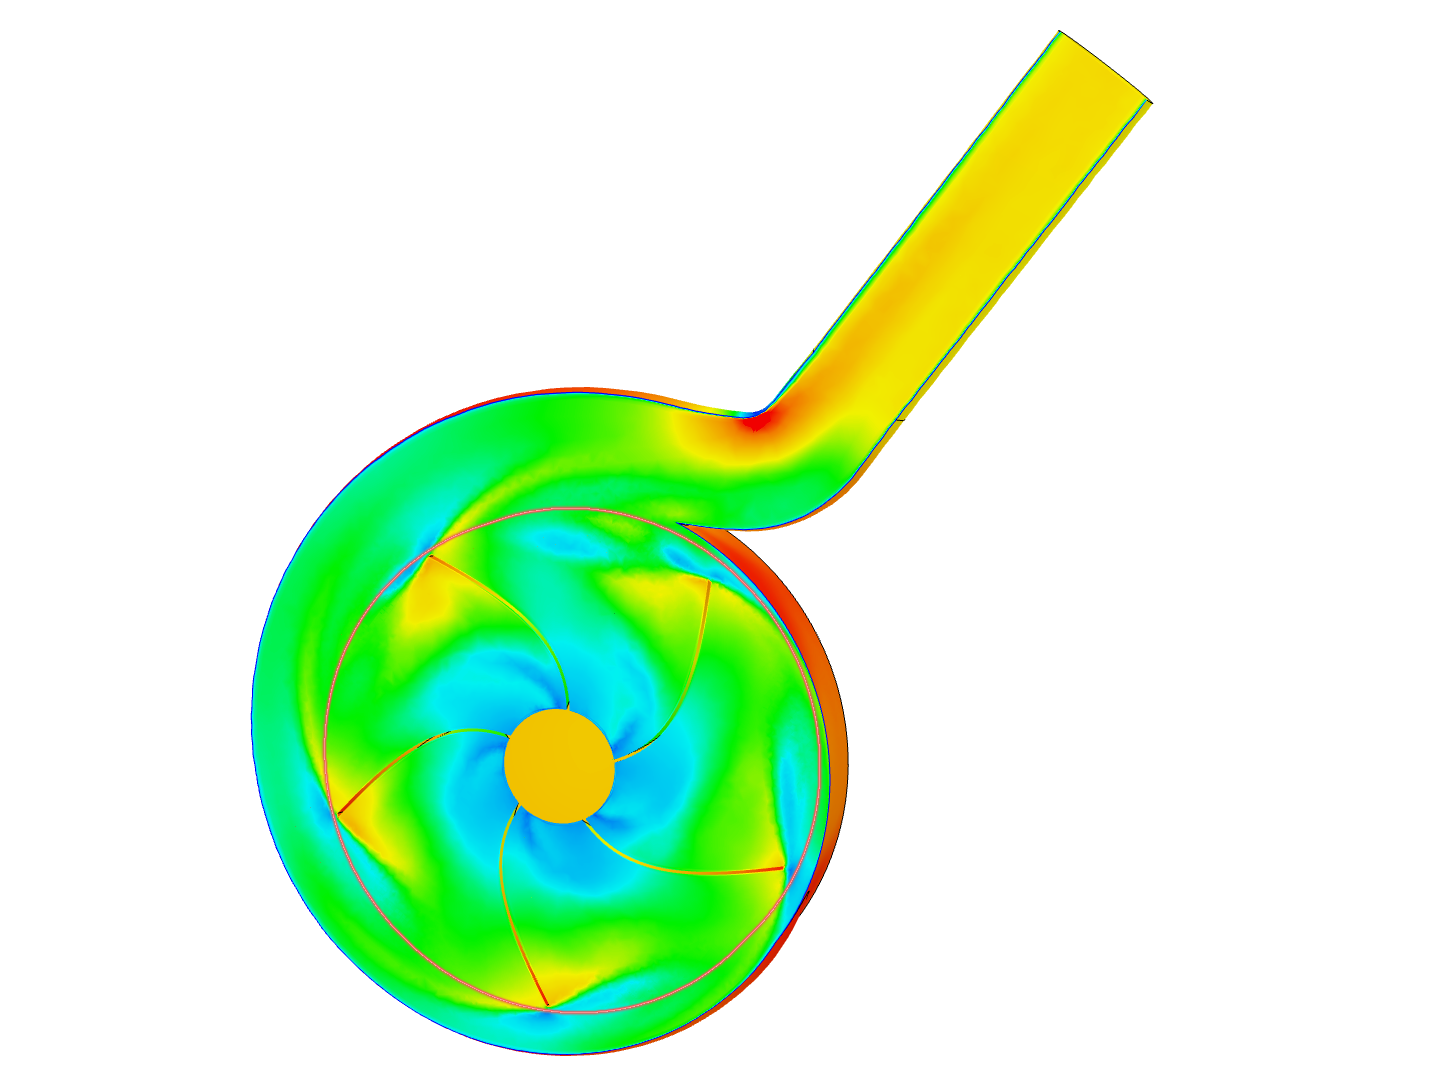 Centrifugal pump-simulation image